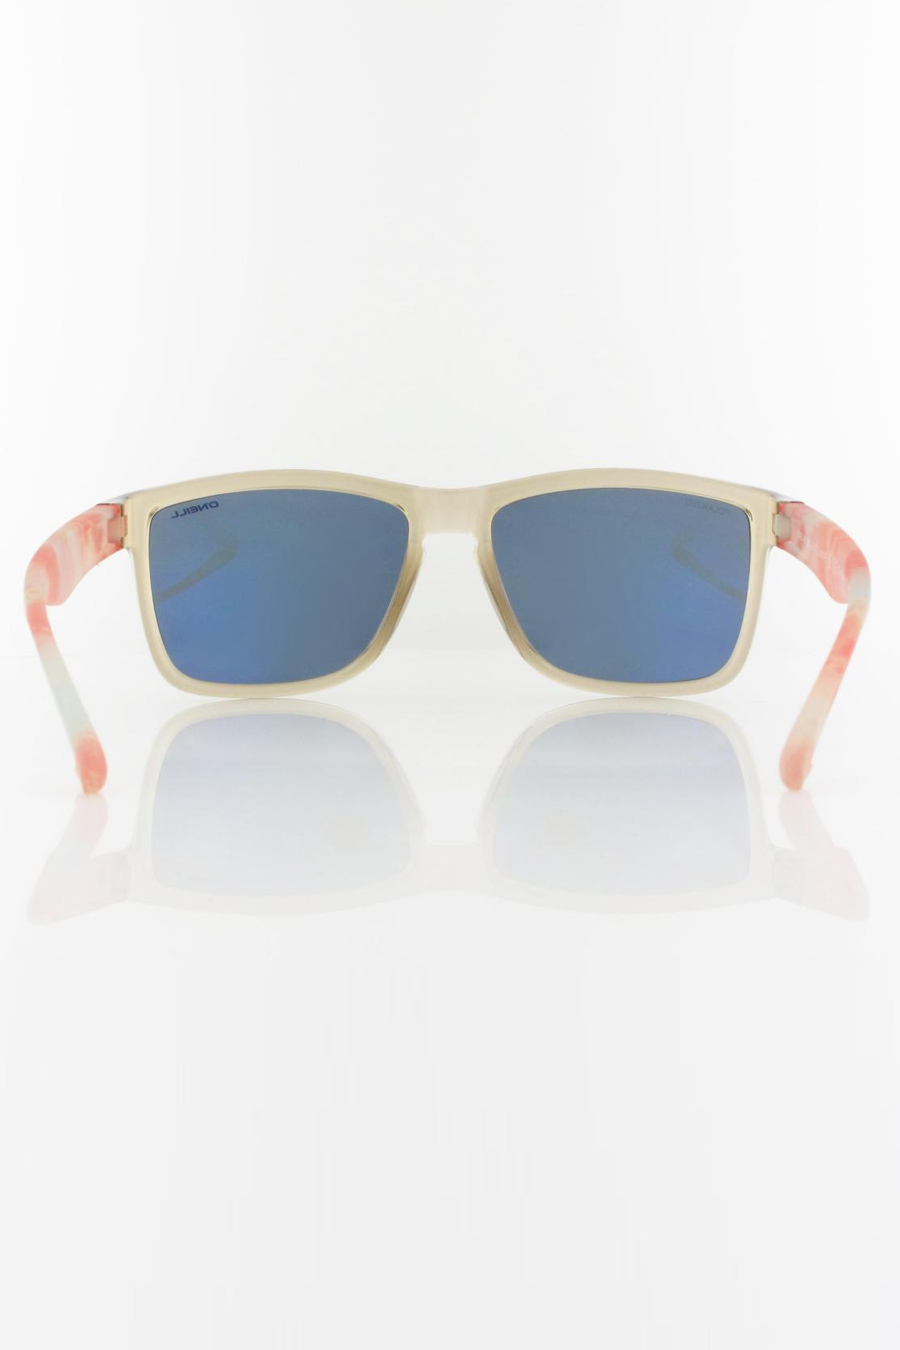 Sunglasses ONEILL ONS-9033-20-100P